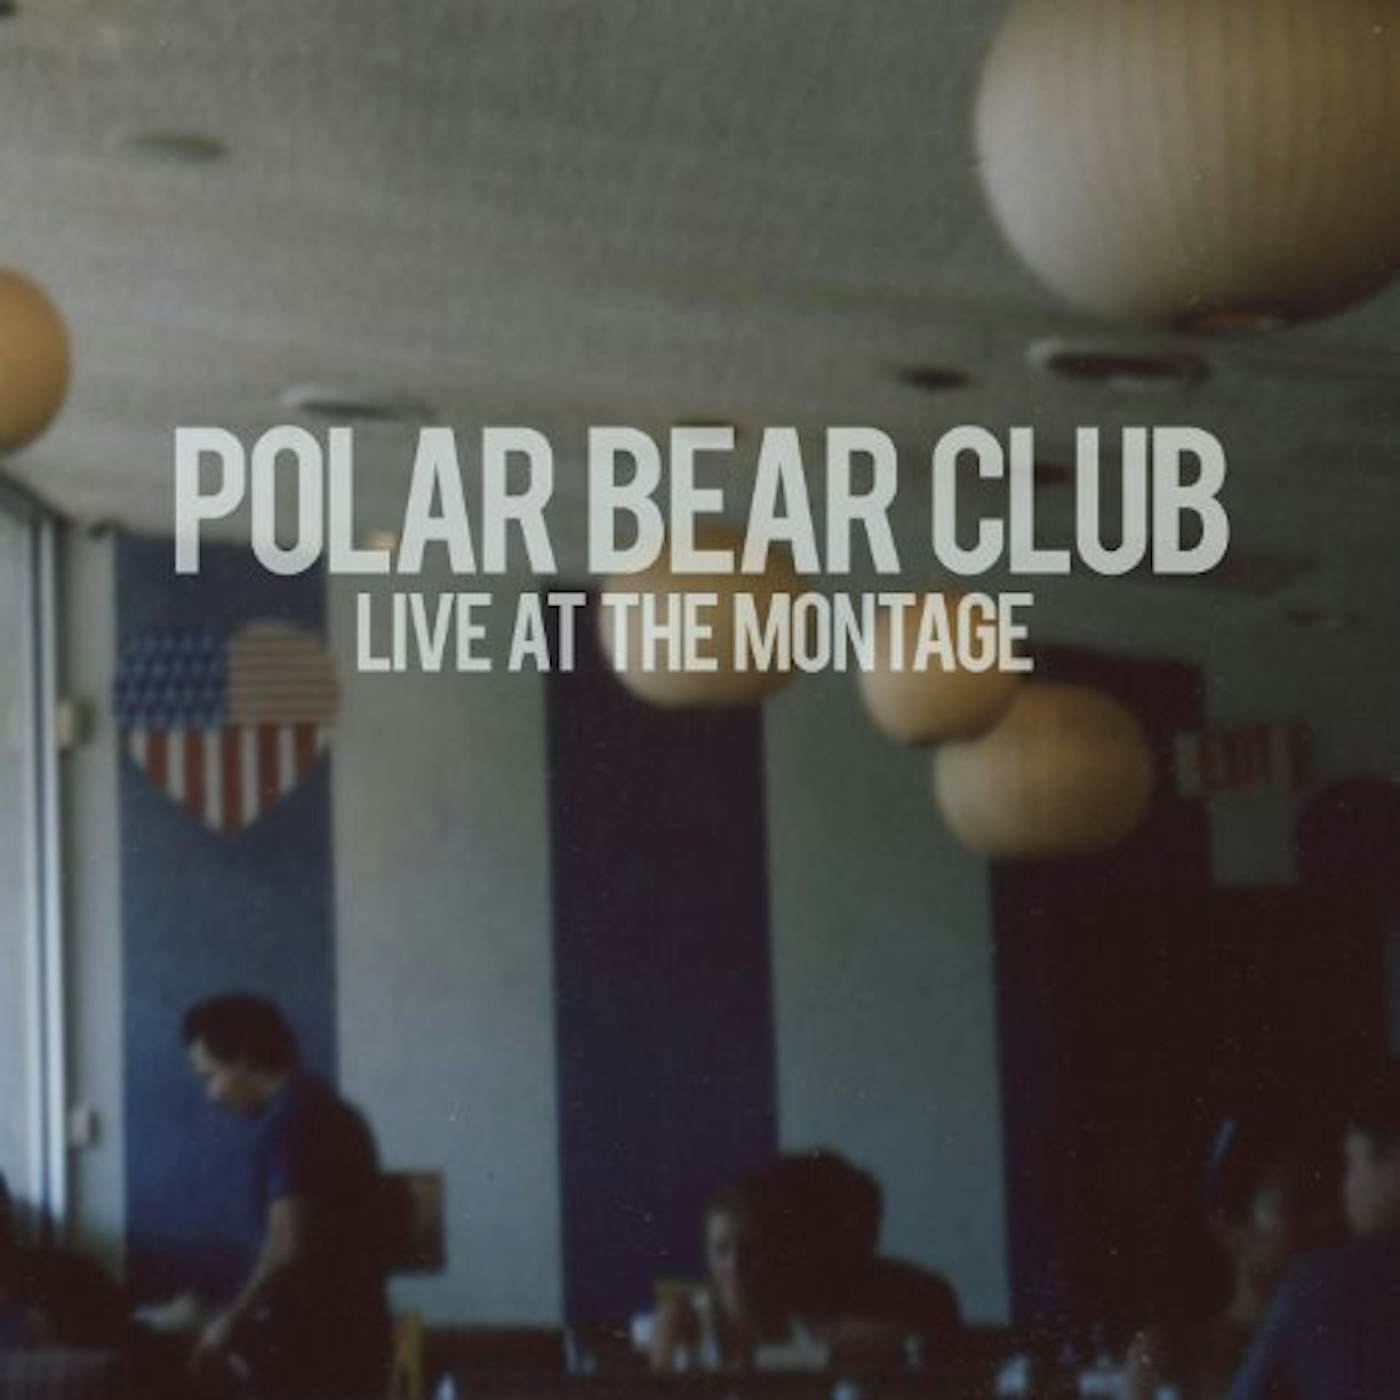 Polar Bear Club Live at The Montage Vinyl Record